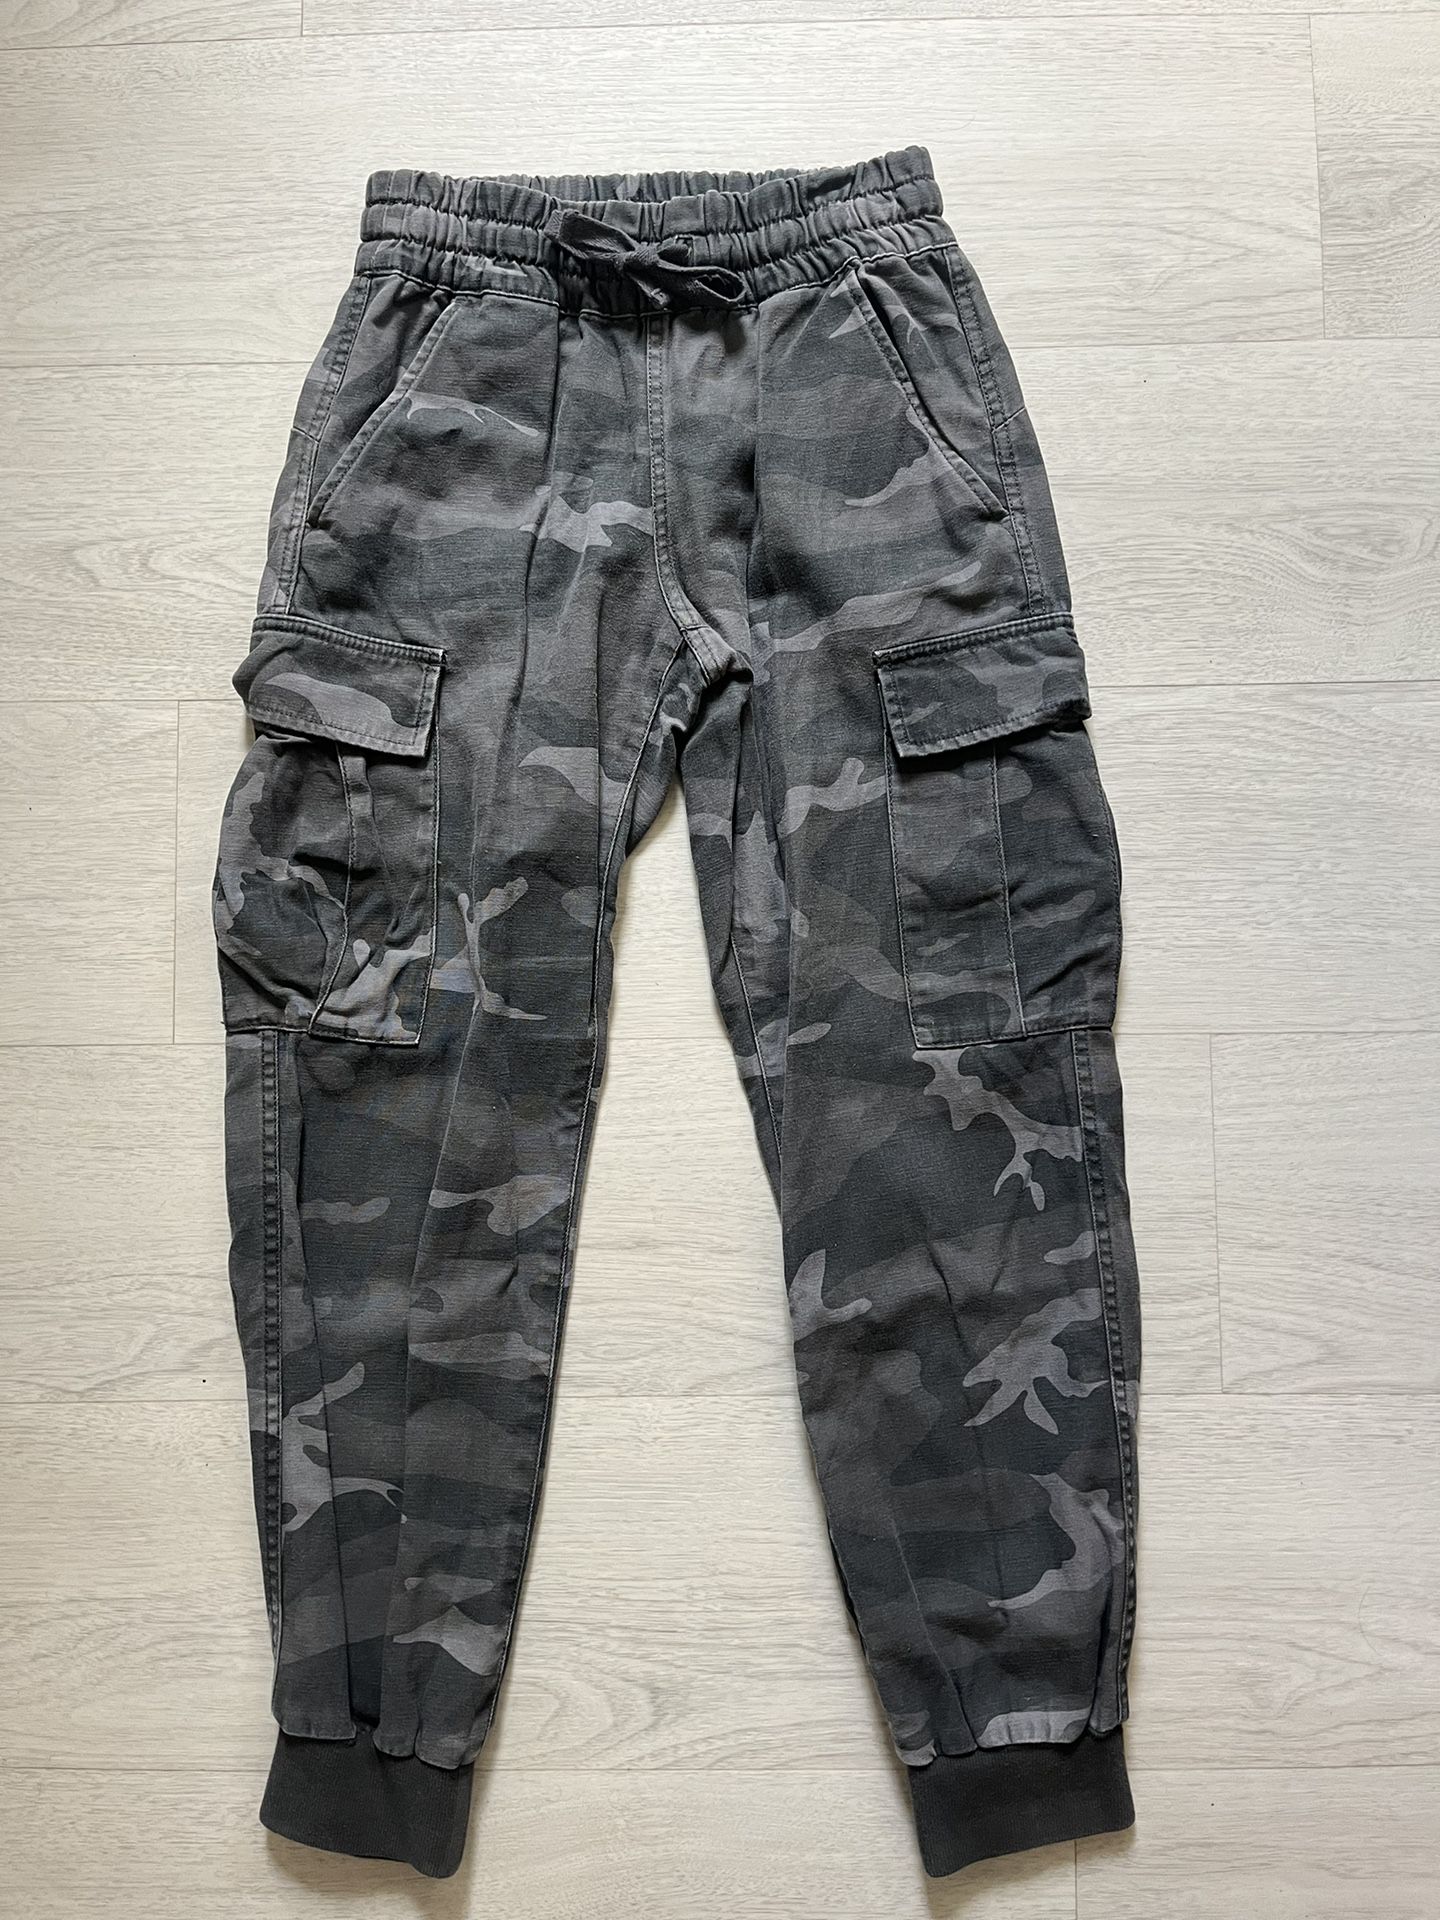 TNA ARITZIA high waisted gray camo pants joggers xxs elastic waist 100% cotton